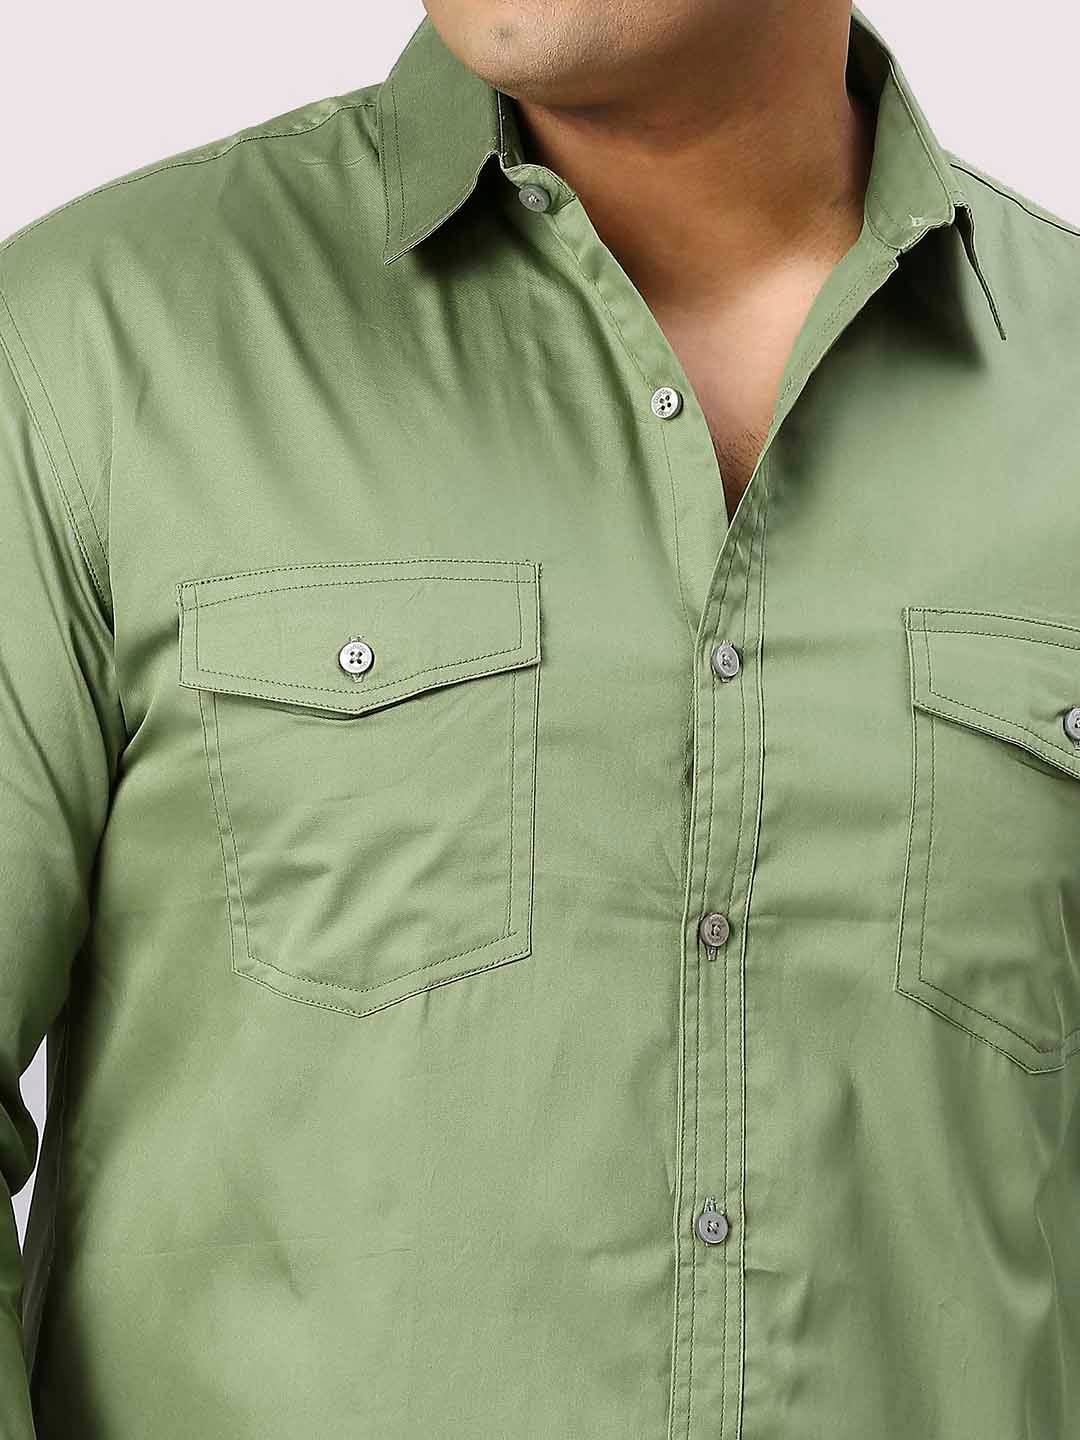 Pista Green Solid Pure Cotton Double Pocket Full Sleeve Shirt Men's Plus Size - Guniaa Fashions